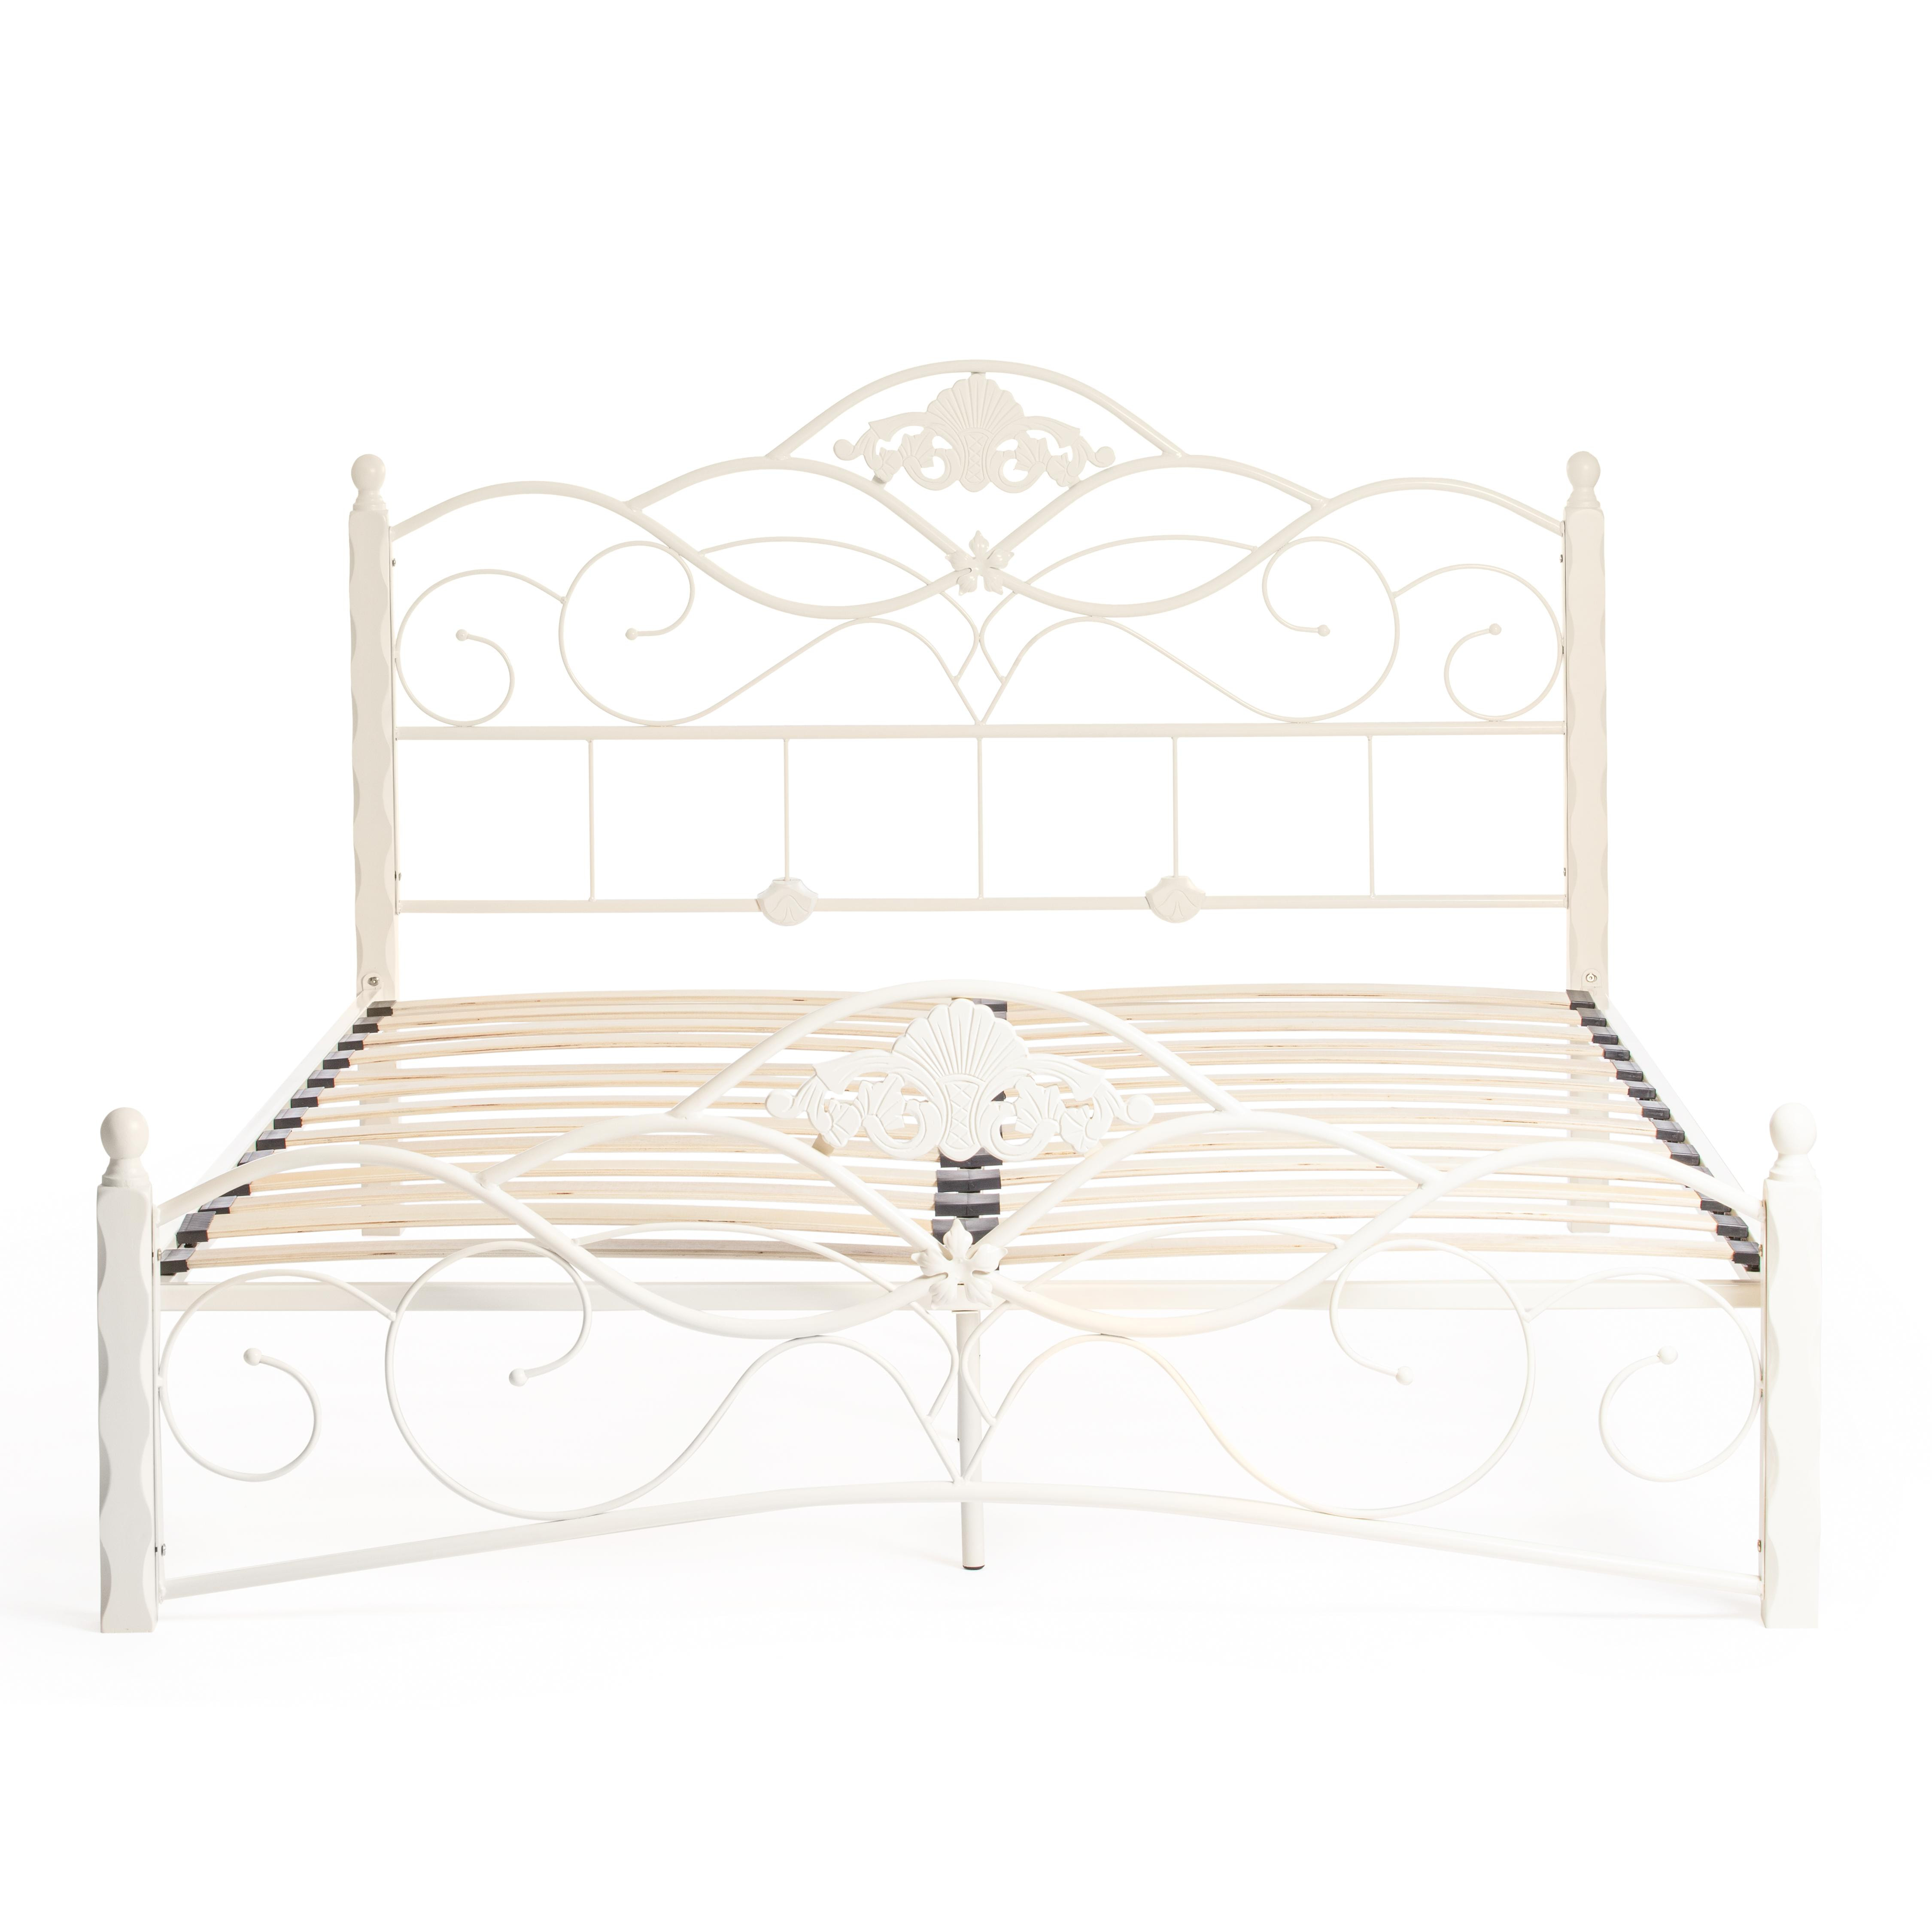 Кровать CANZONA Wood slat base дерево гевея/металл, 160*200 см (Queen bed), Белый (butter white)